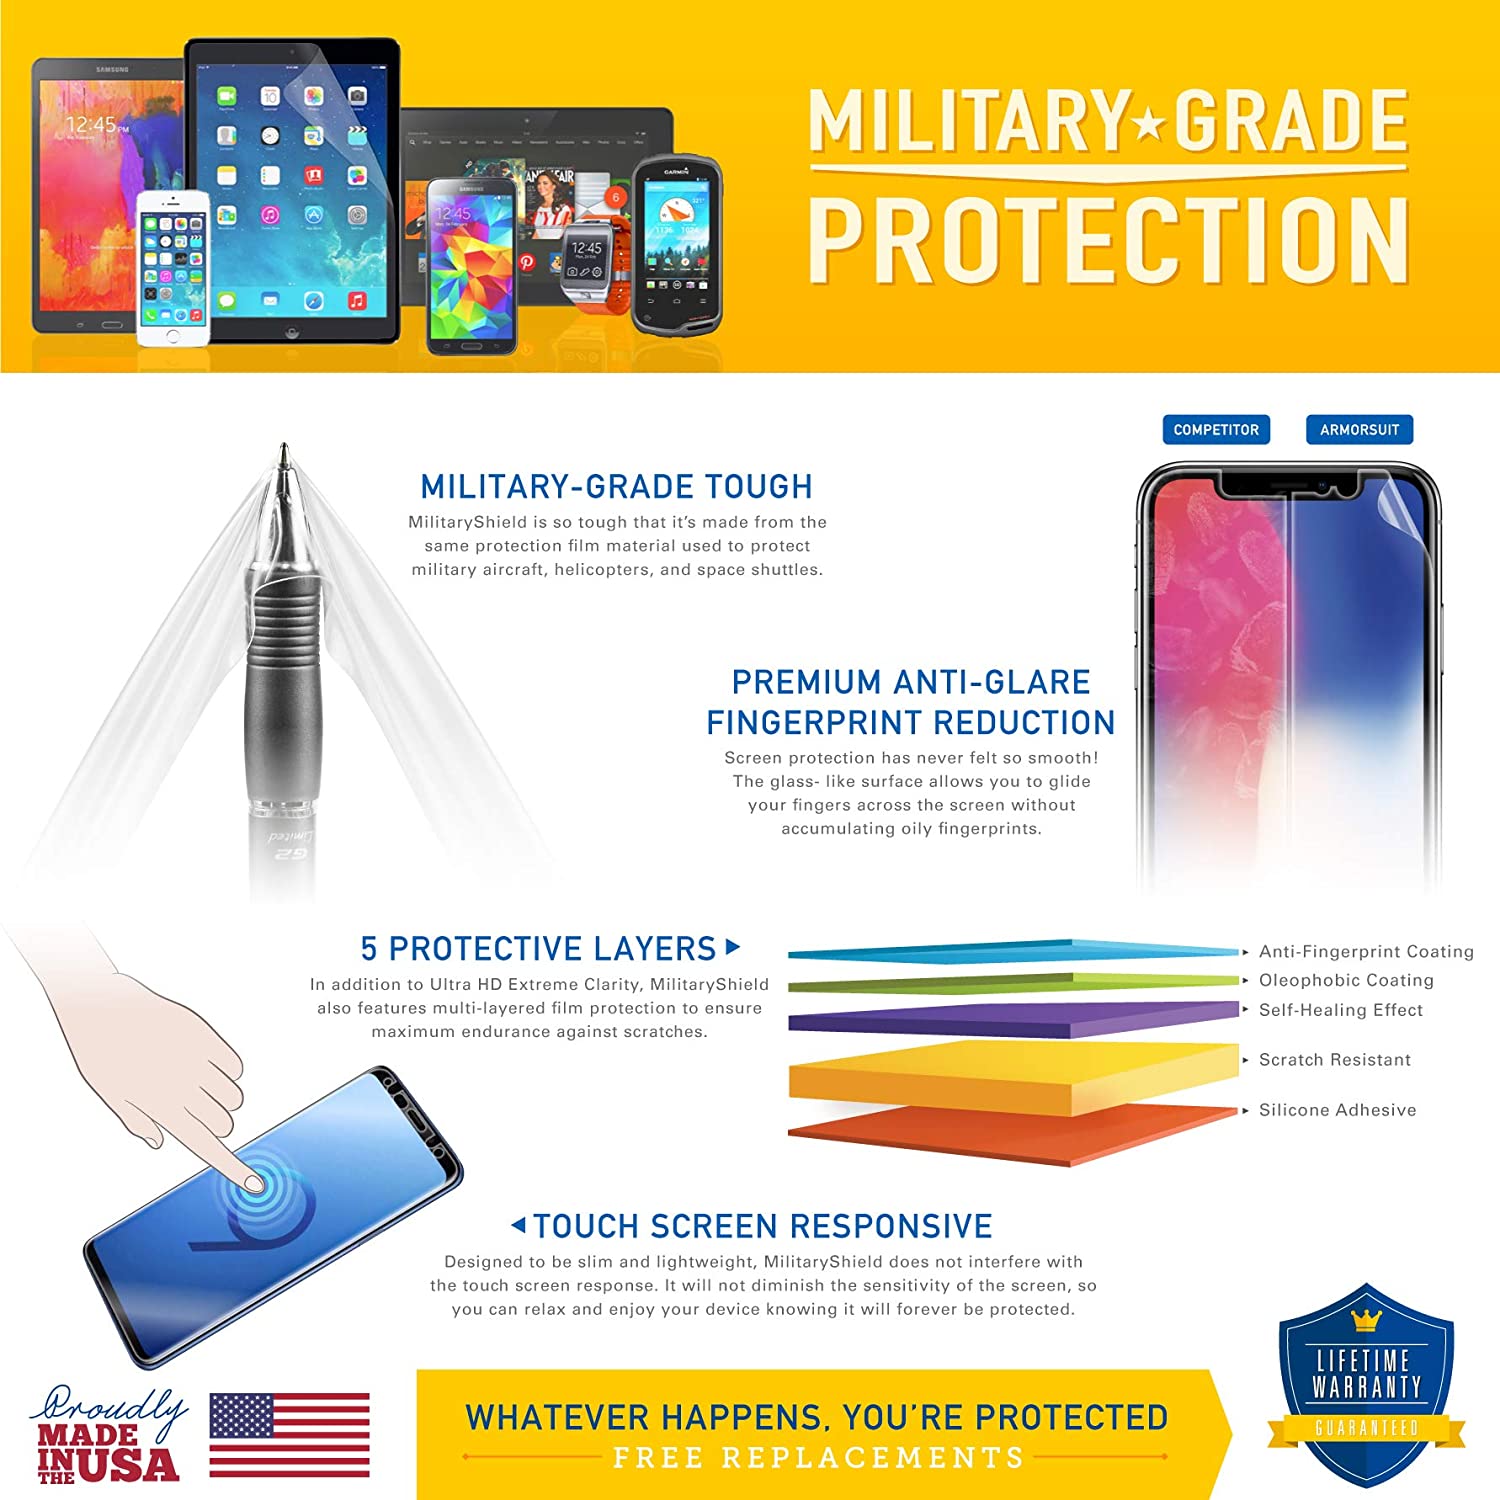 [2 Pack] LG Calisto GW525 Screen Protector